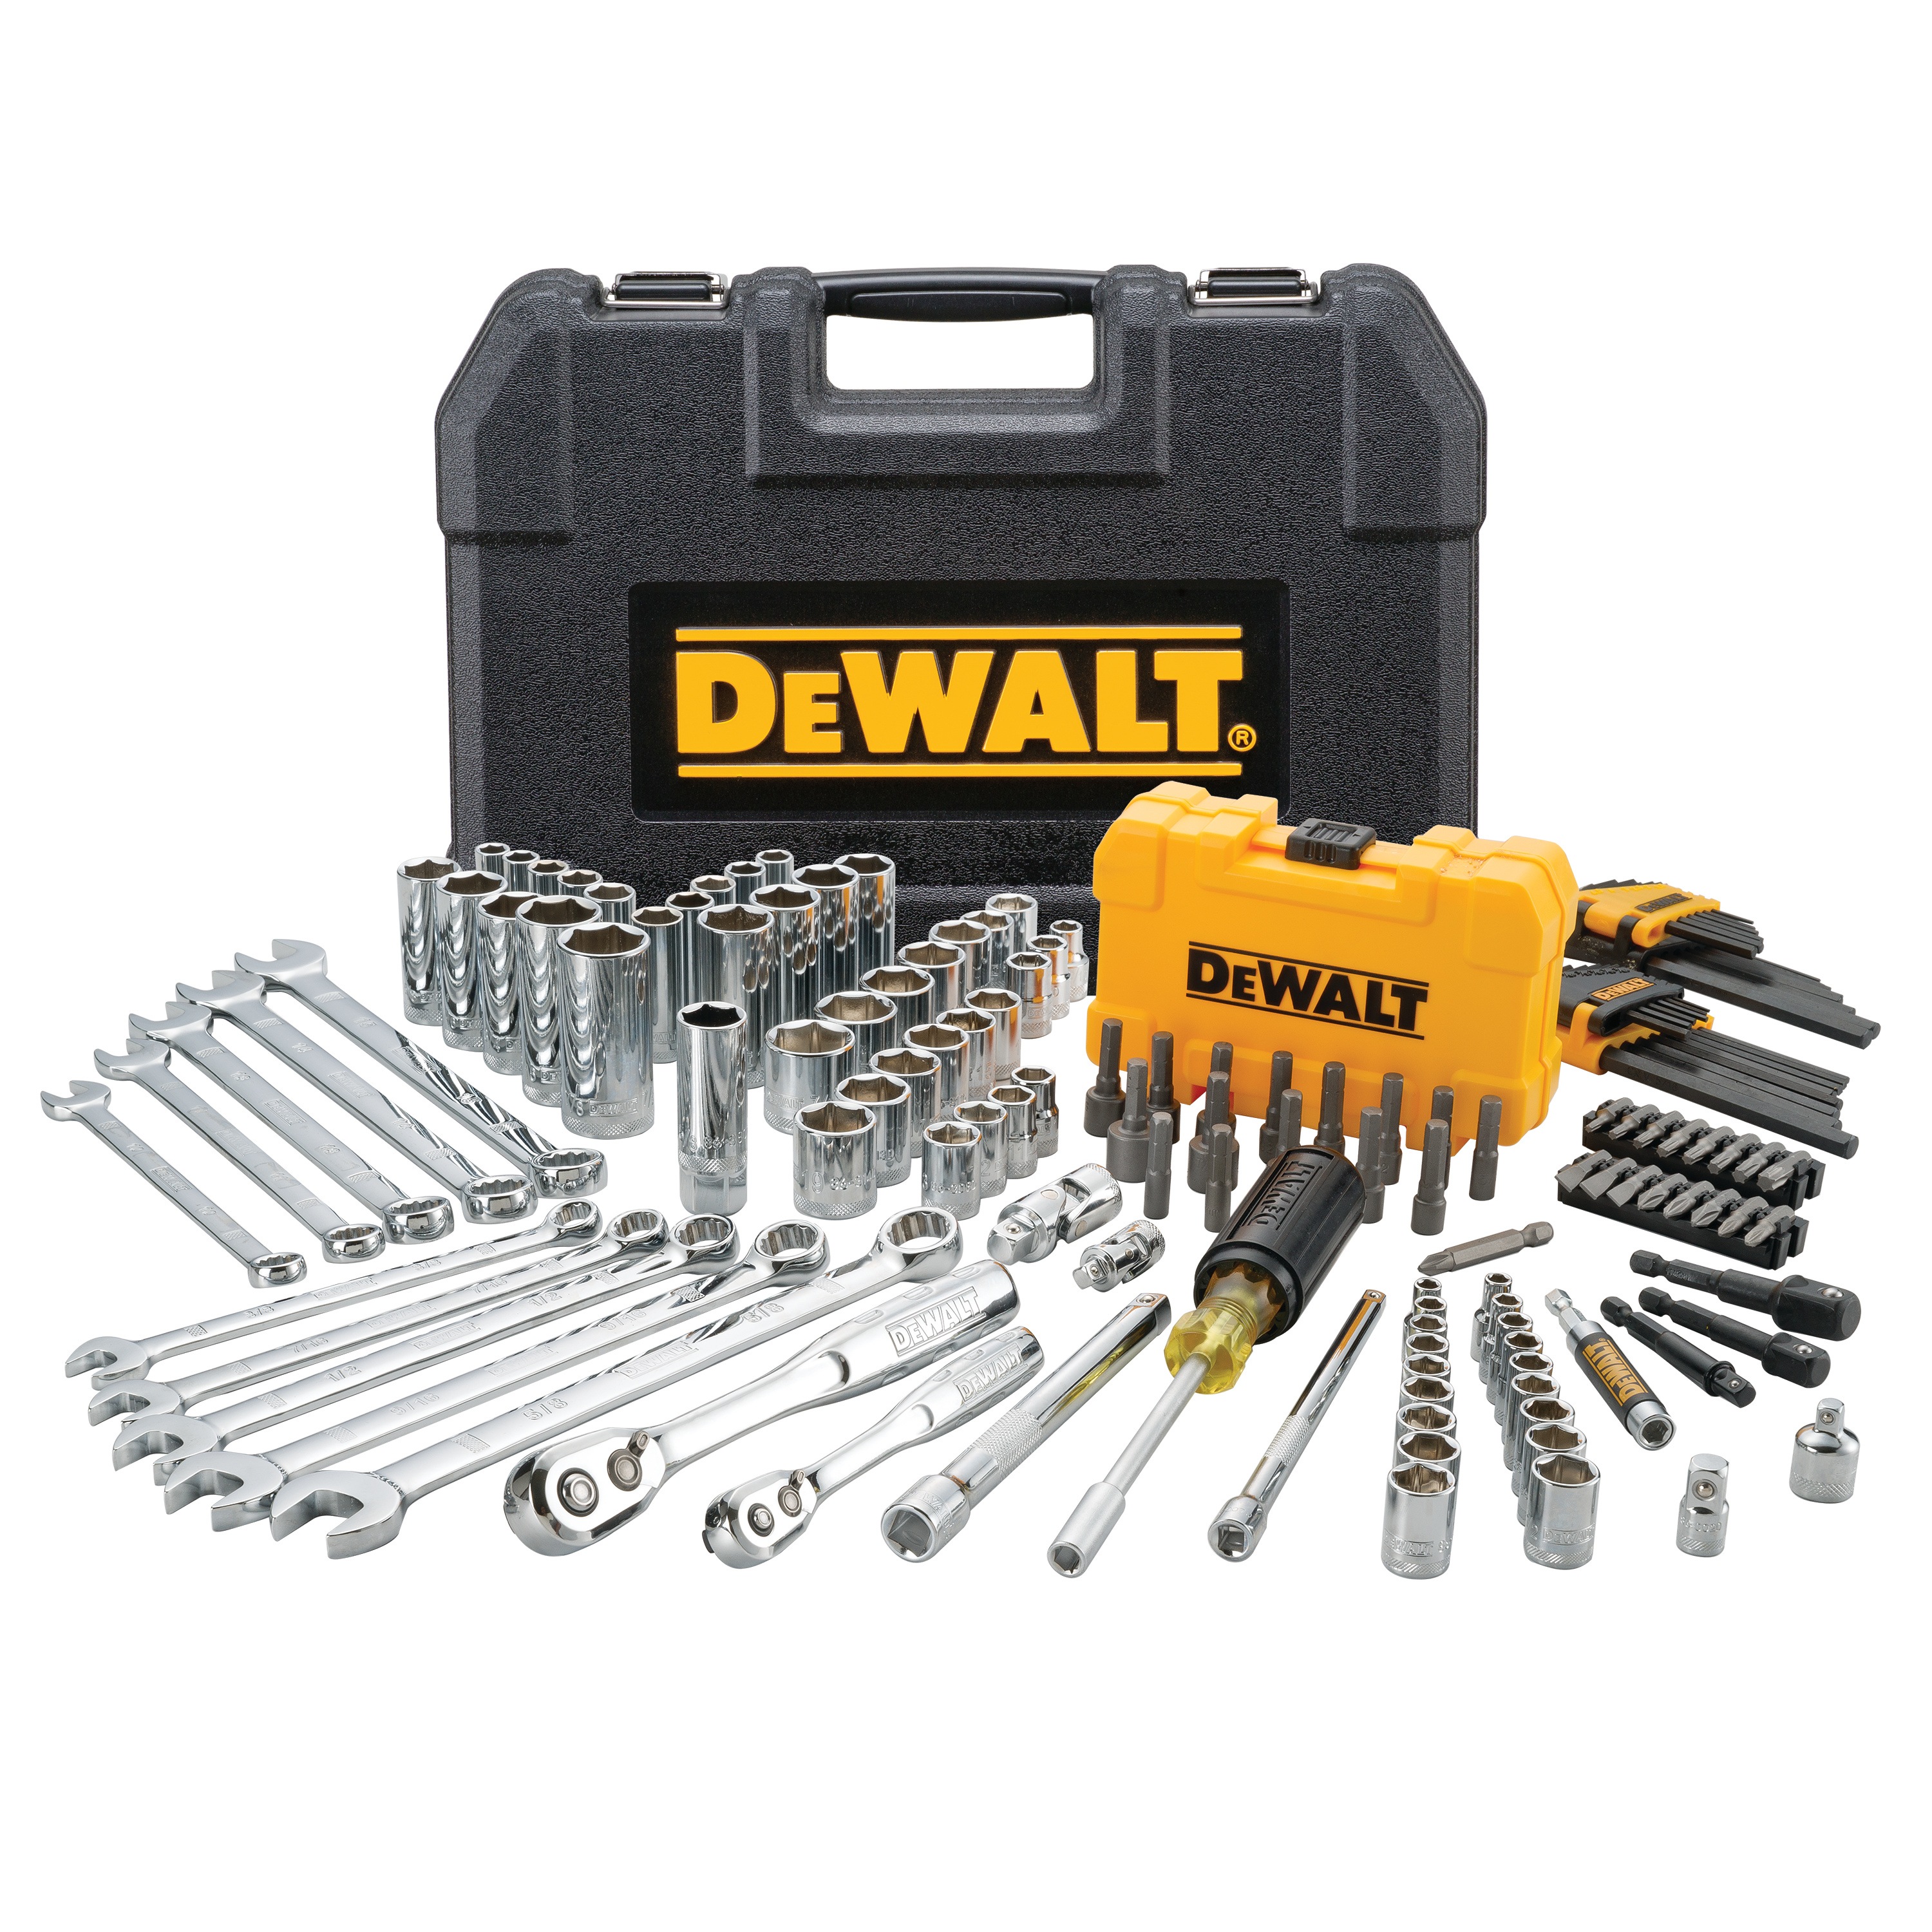 14 Piece Dewalt Tool Set Discount, SAVE 53%.